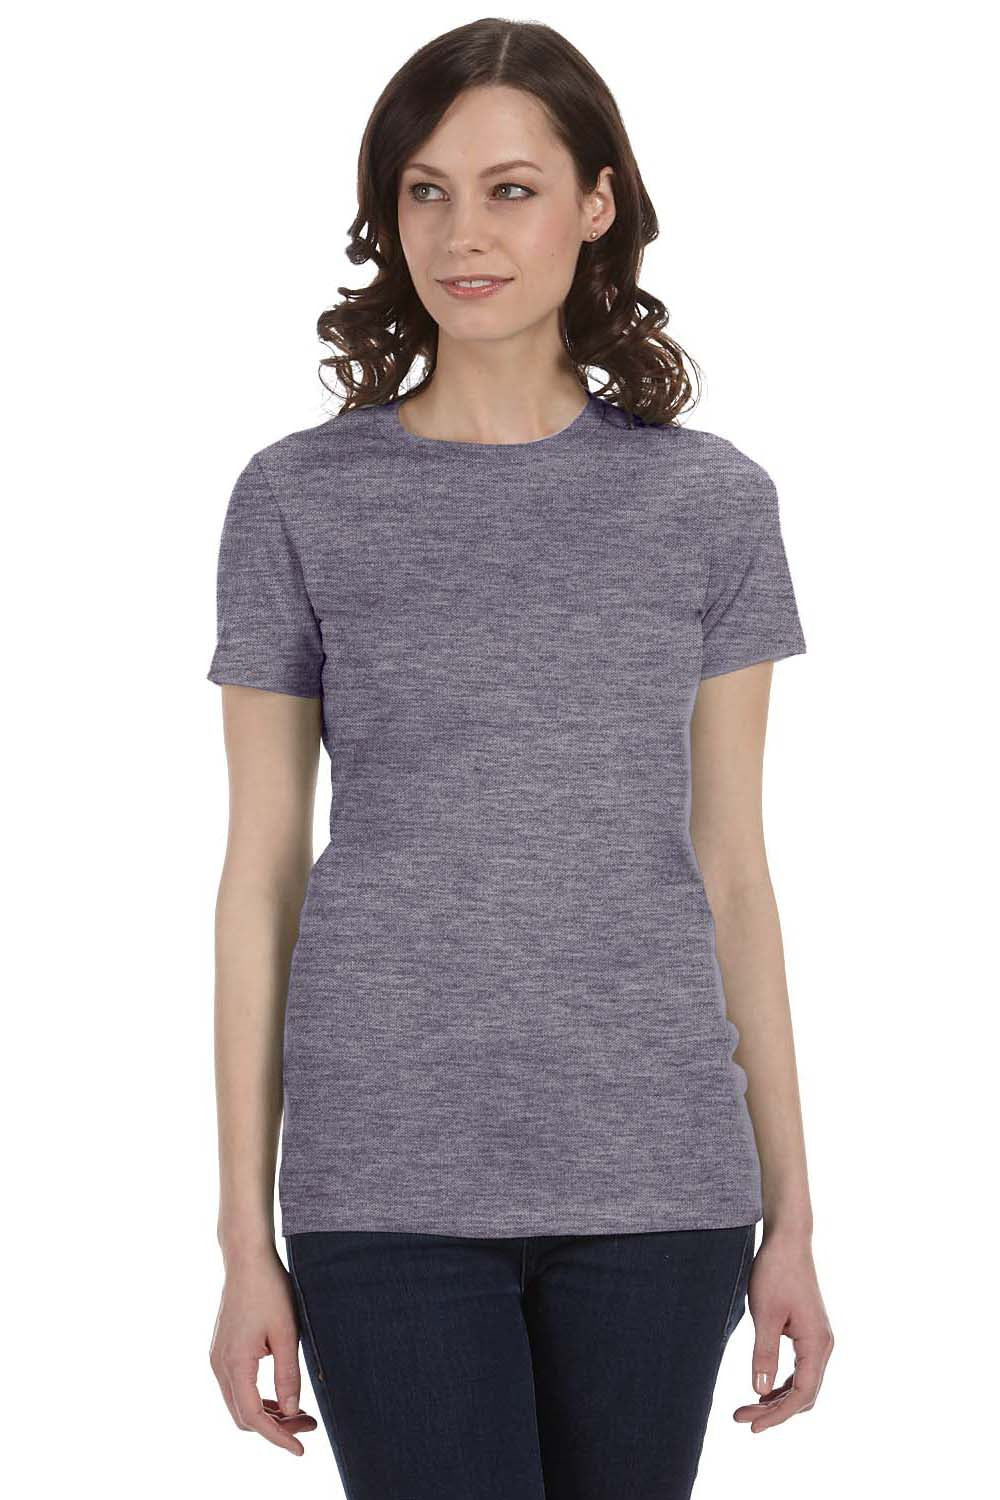 Bella + Canvas 6004 Womens The Favorite Short Sleeve Crewneck T-Shirt Heather Purple Front